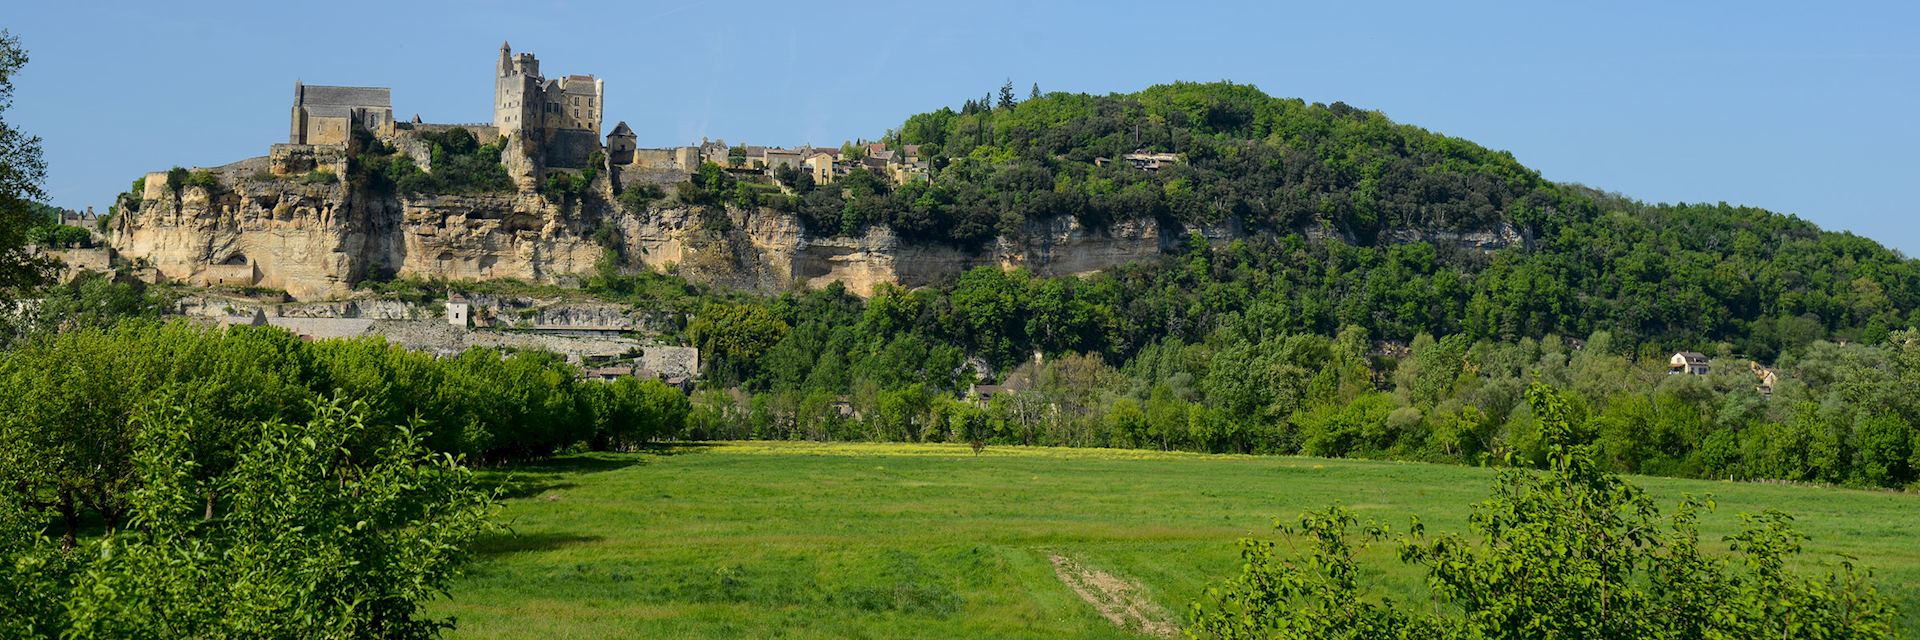 Views overlooking Château de Beynac, Beynac-et-Cazenac, Dordogne